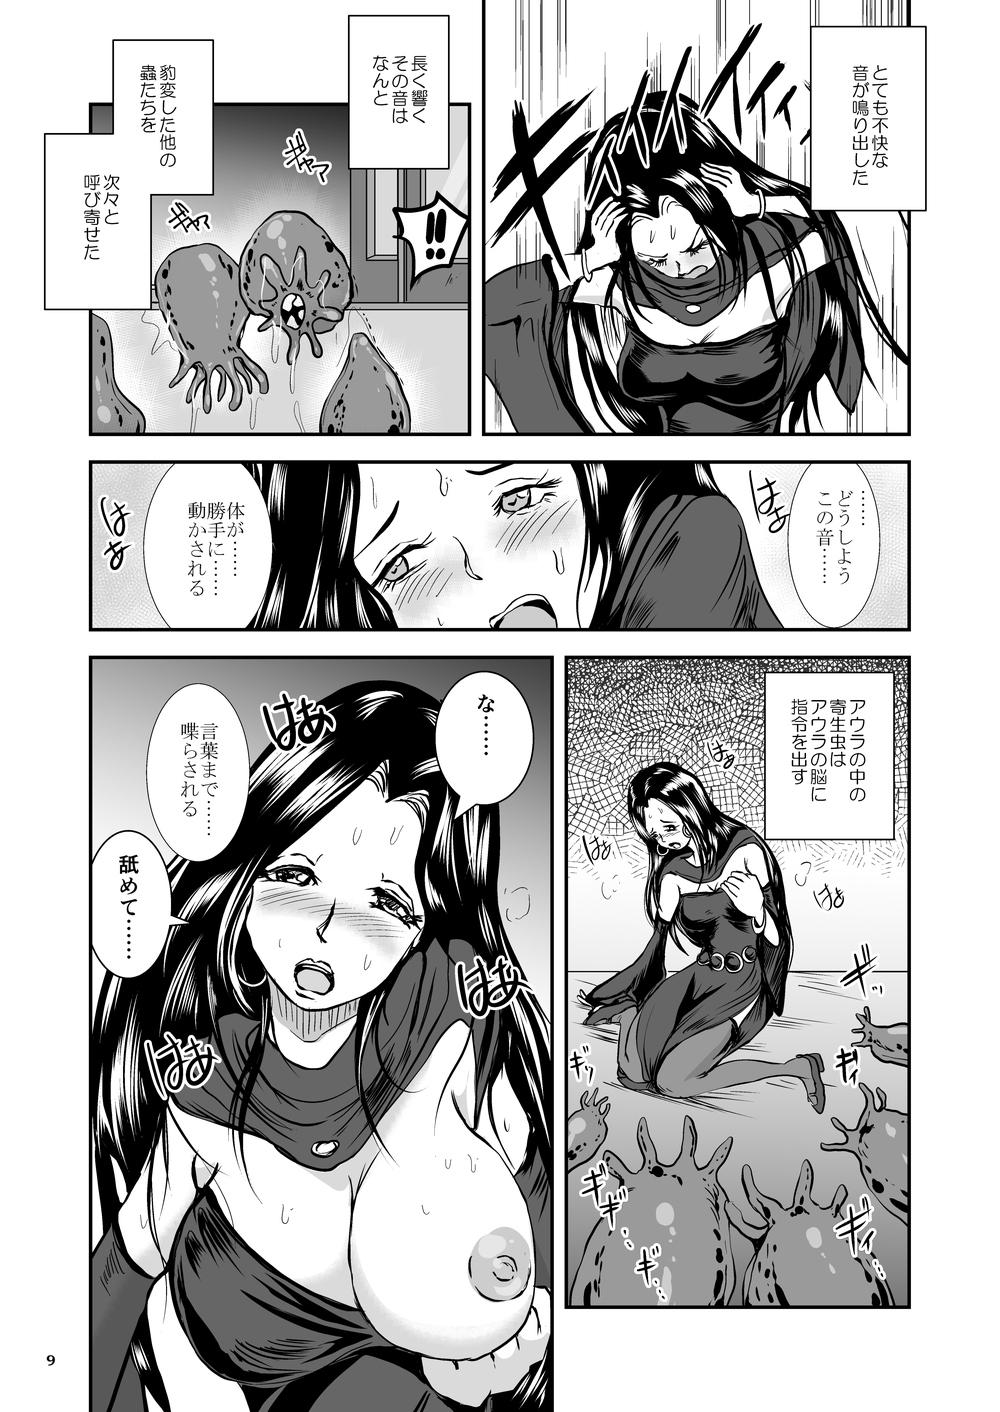 She Oonamekuji to Kurokami no Mahoutsukai - Parasitized Giant Slugs V.S. Sorceress of the Black Hair as Aura Top - Page 9